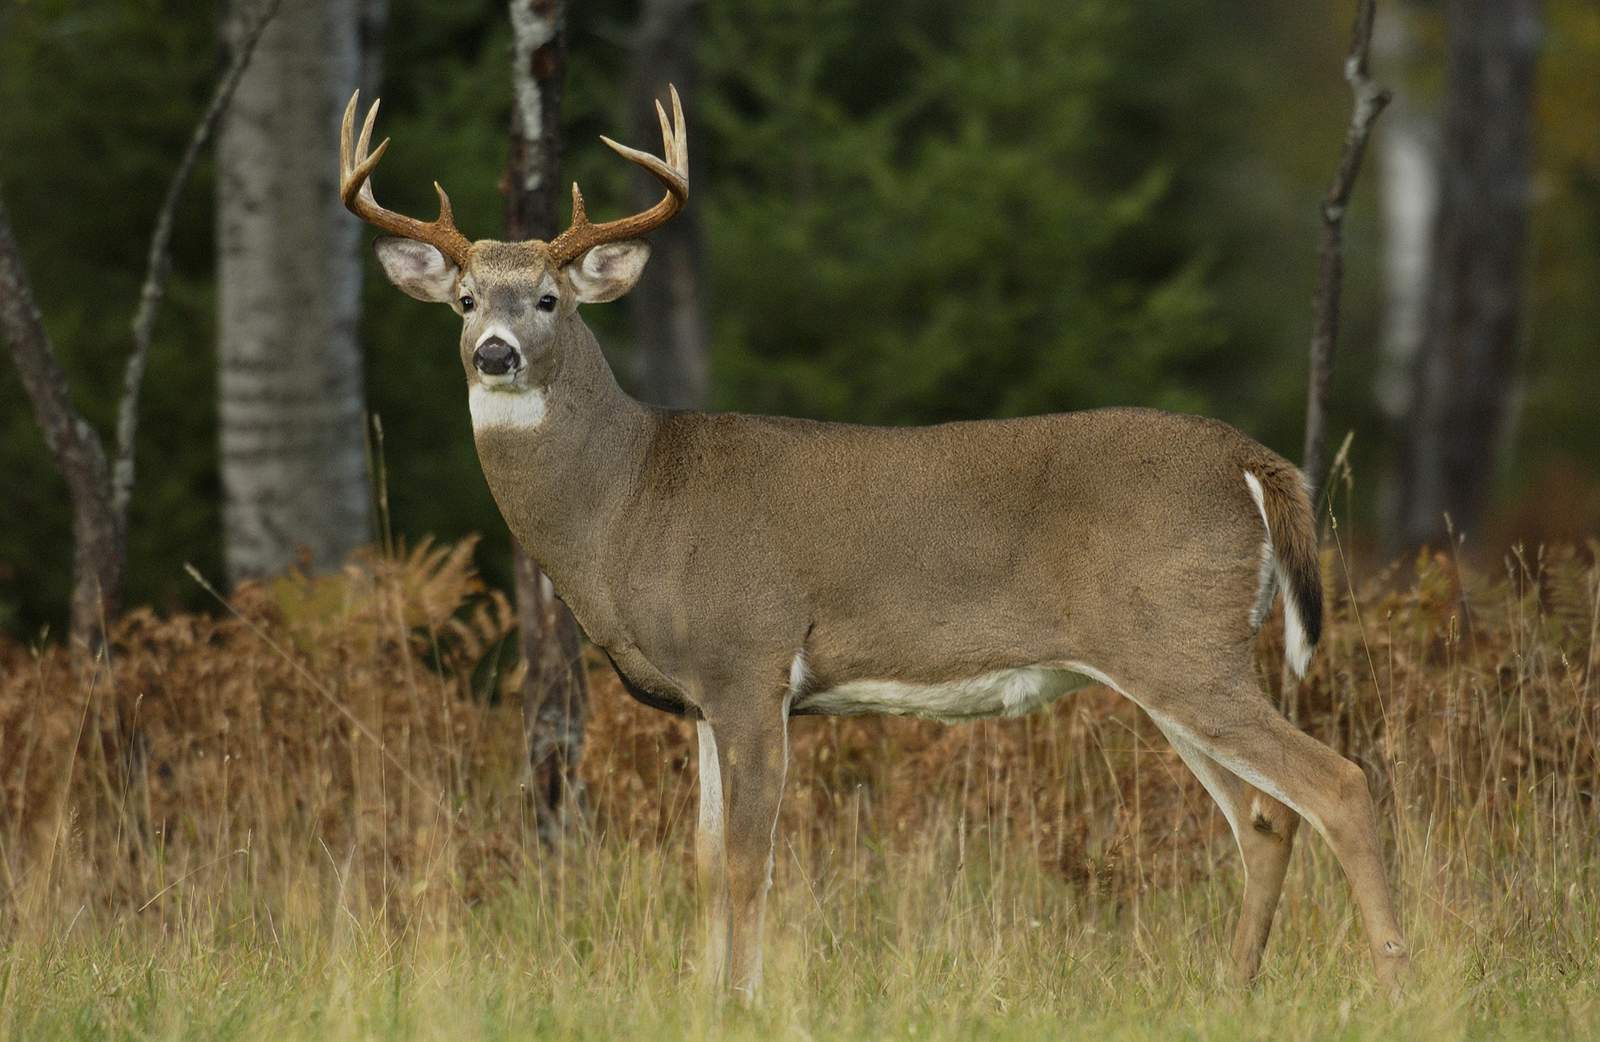 Michigan’s firearm deer hunting season begins Sunday